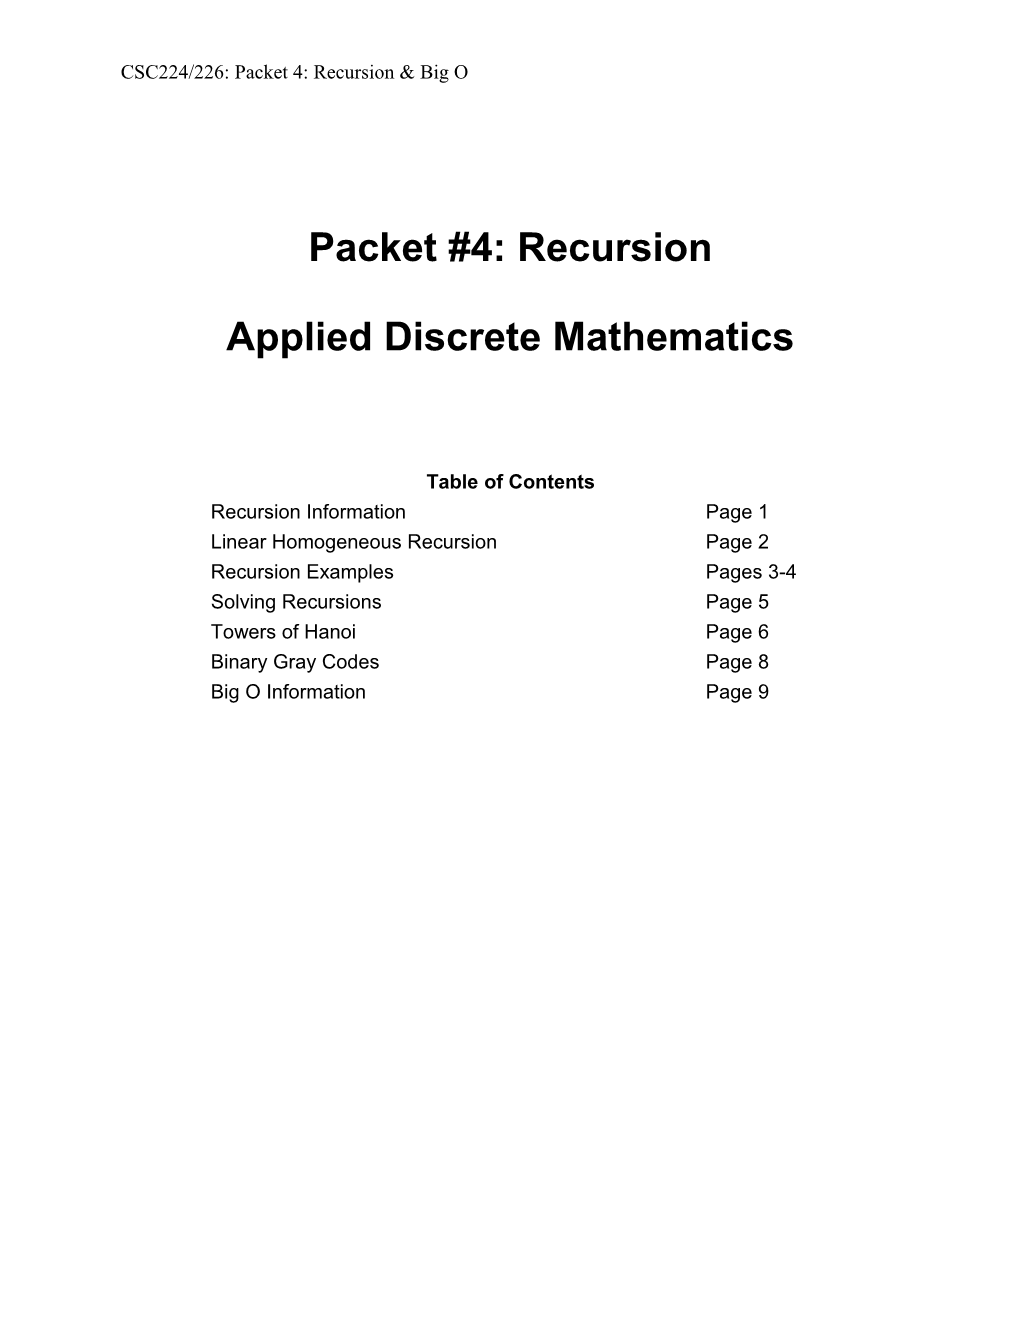 Packet #4: Recursion